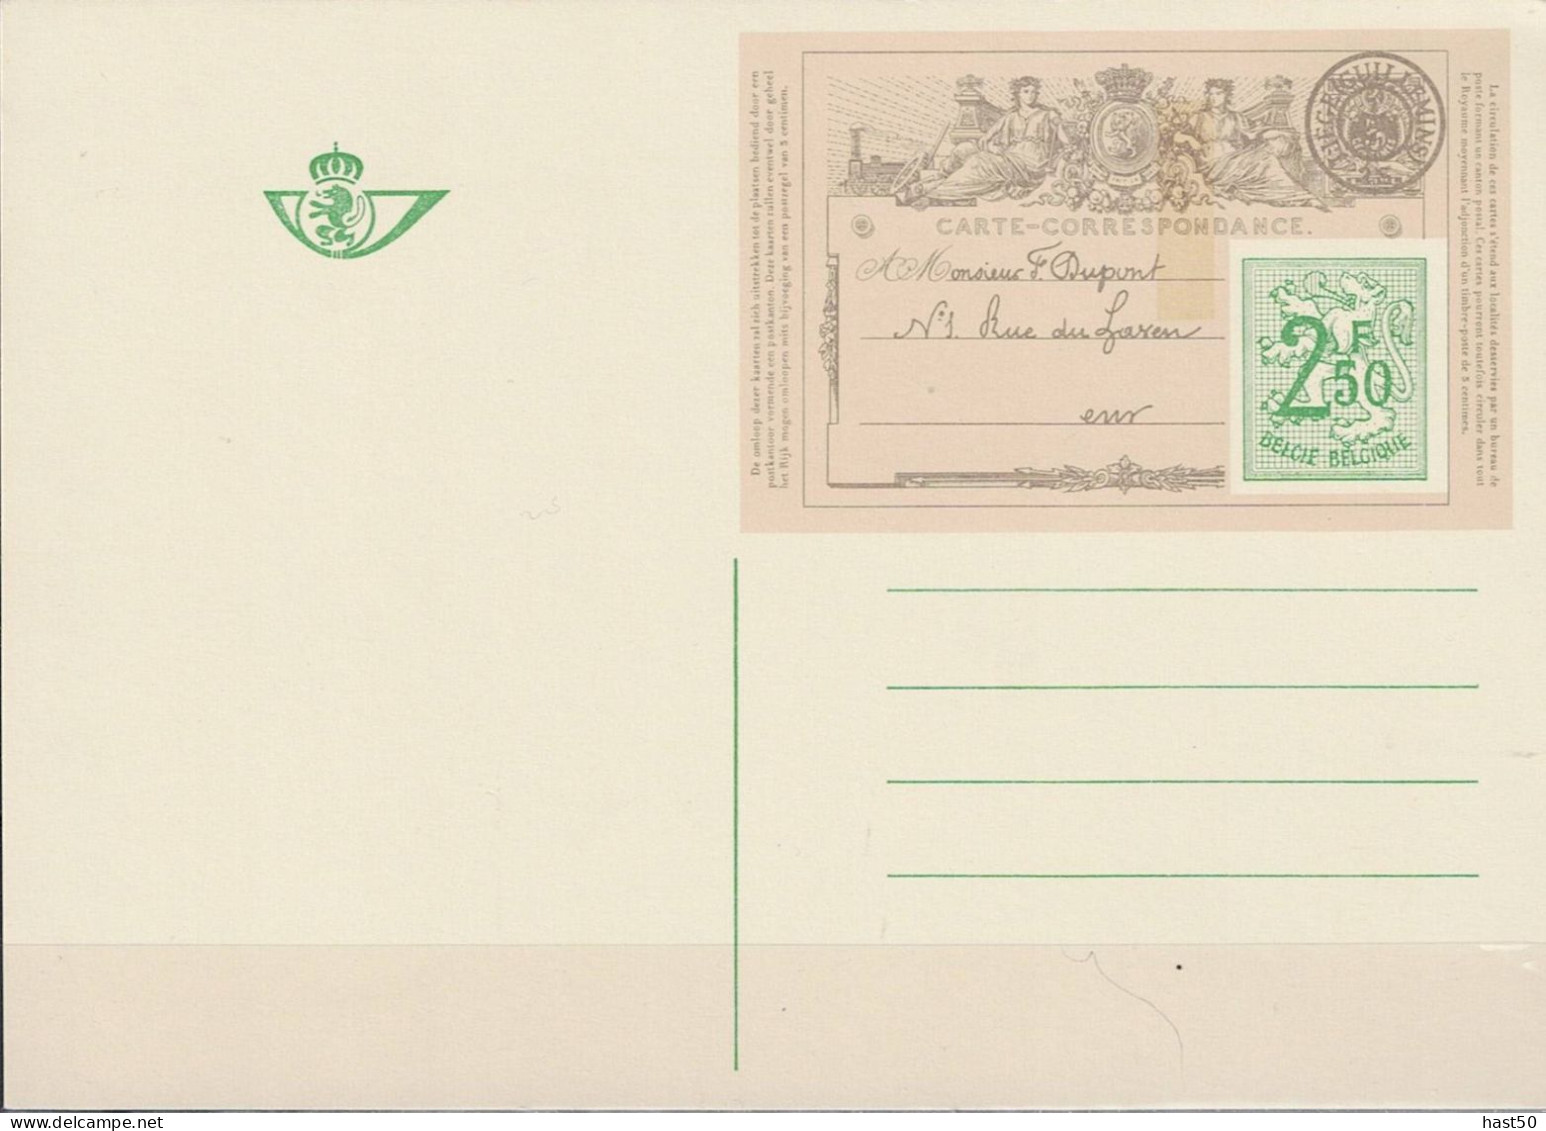 Belgien Belgium Belgique - Postkarte "100  Jahre Postkarte" (MiNr: P348) 1971 - Siehe Scan - Illustrierte Postkarten (1971-2014) [BK]